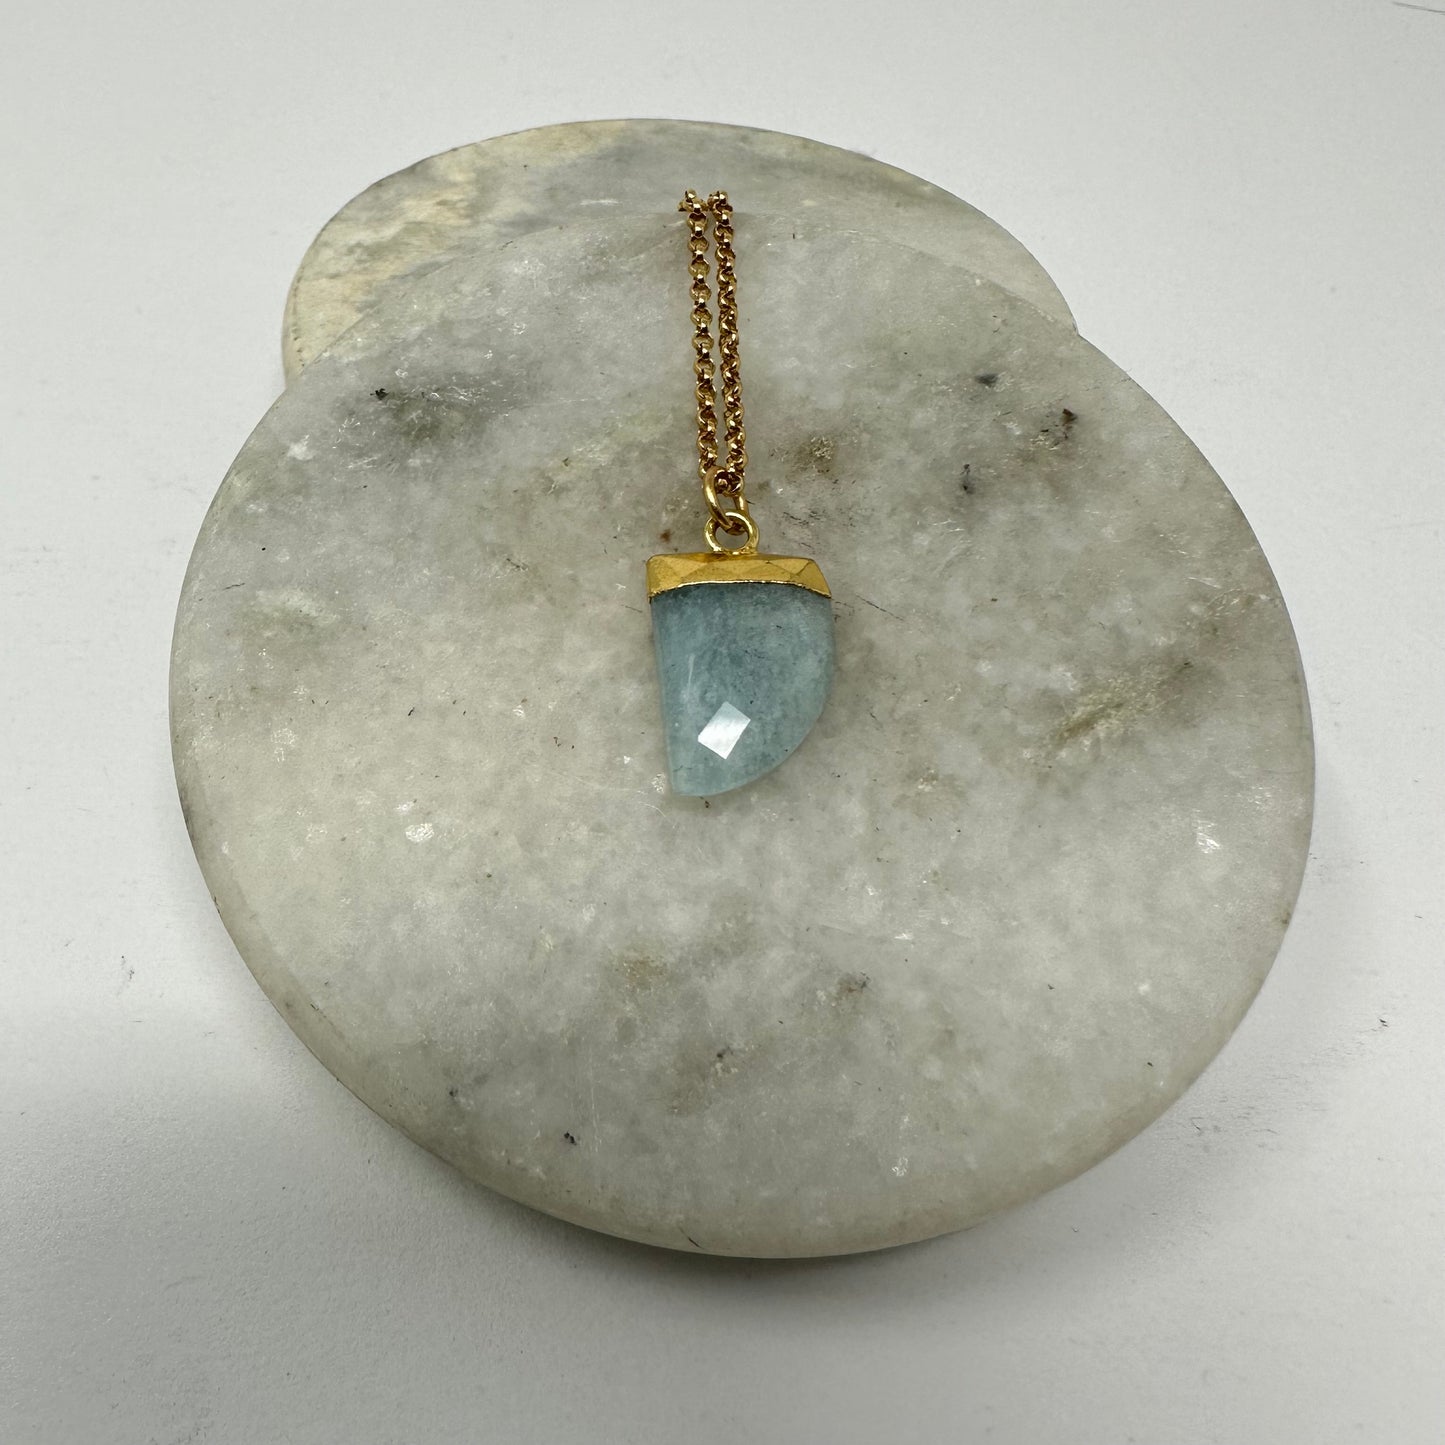 Horn shape aquamarine pendant